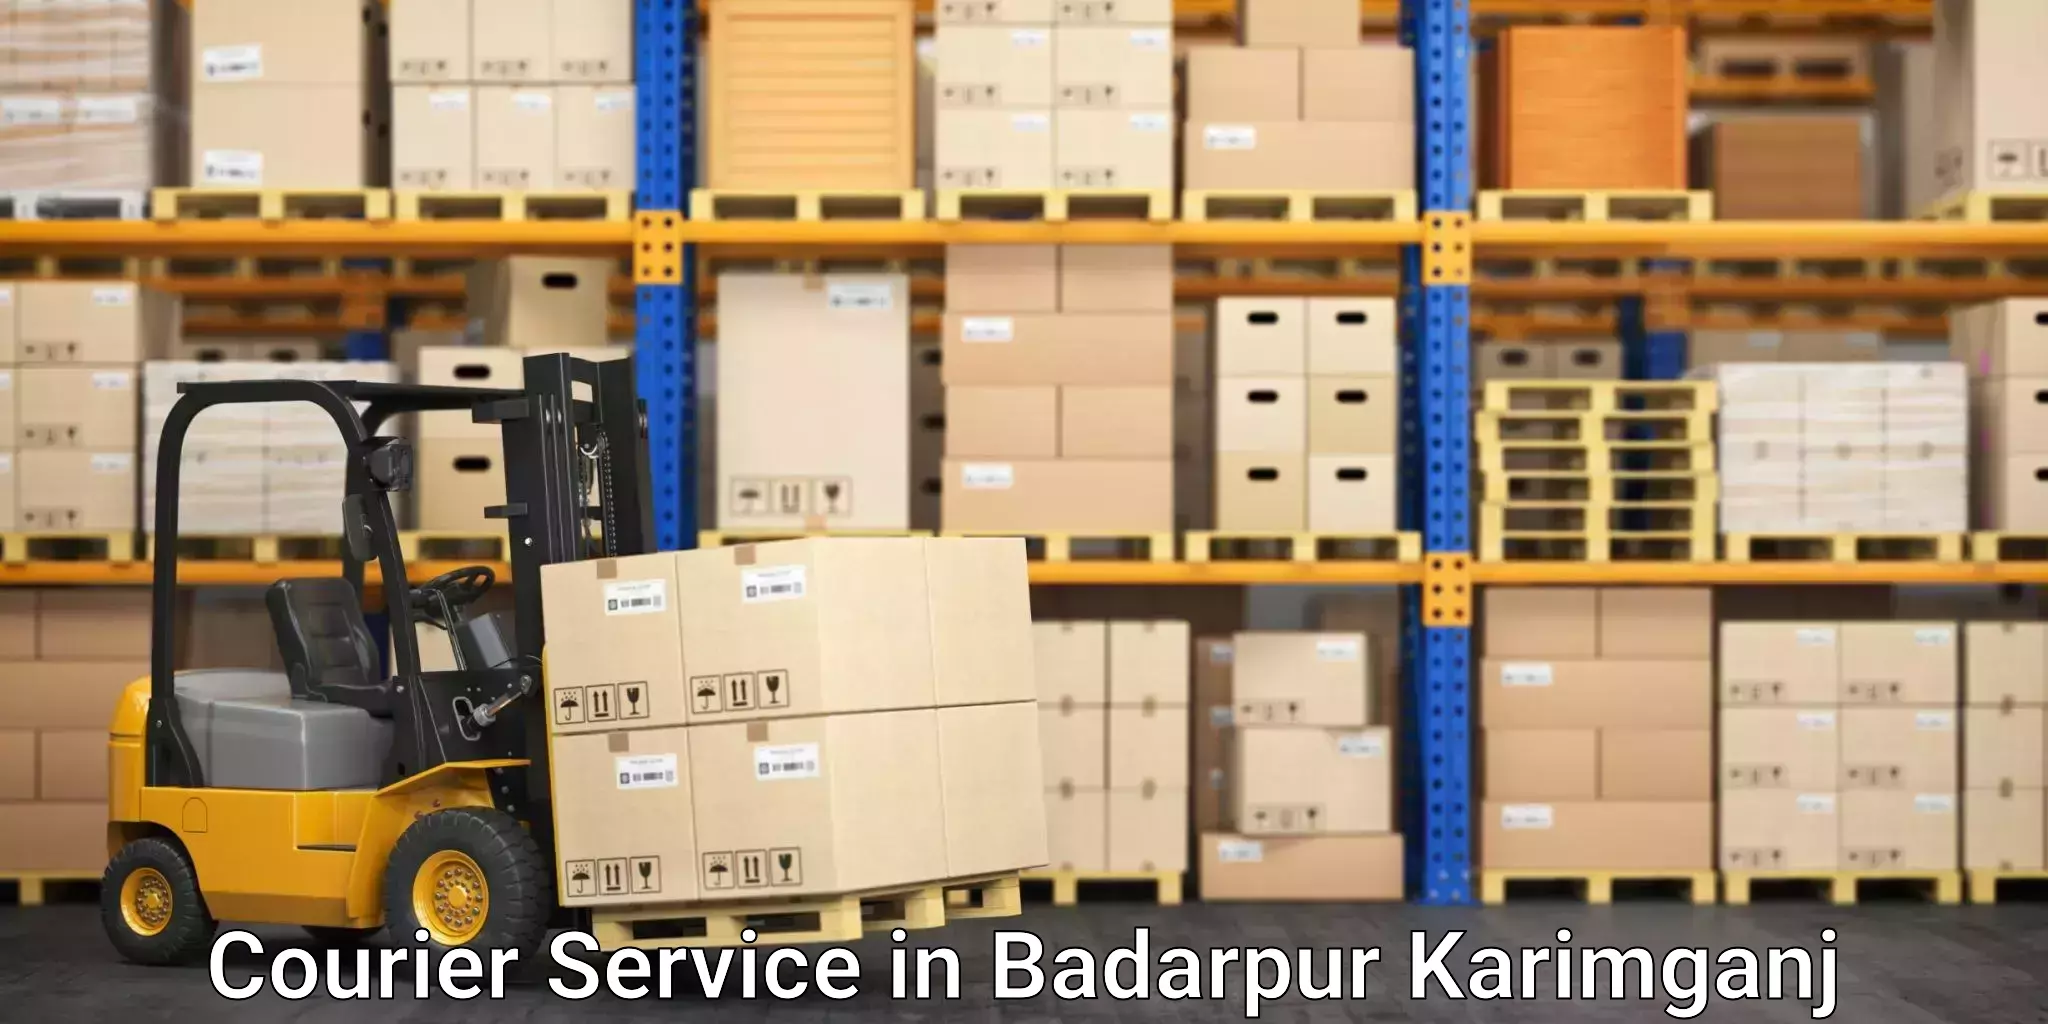 Efficient cargo handling in Badarpur Karimganj